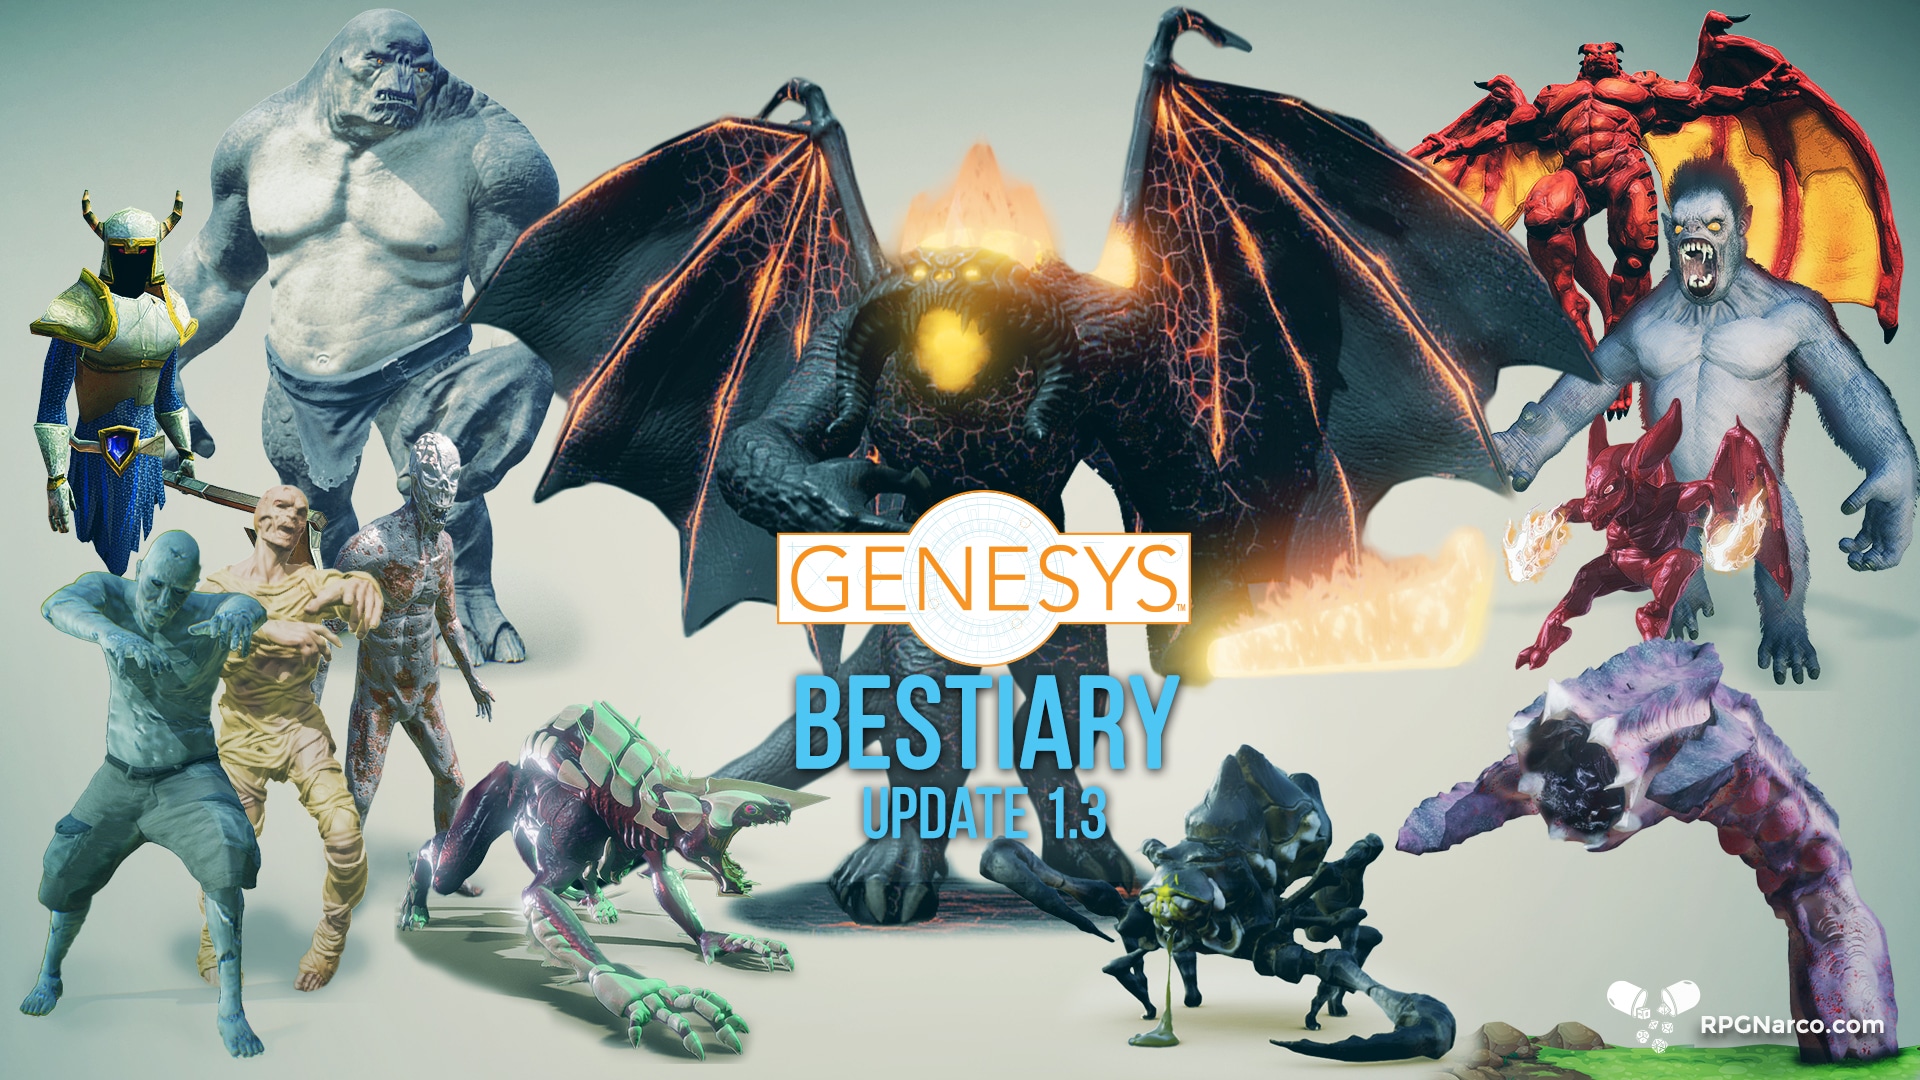 Genesys Bestiary 3rd Update 01